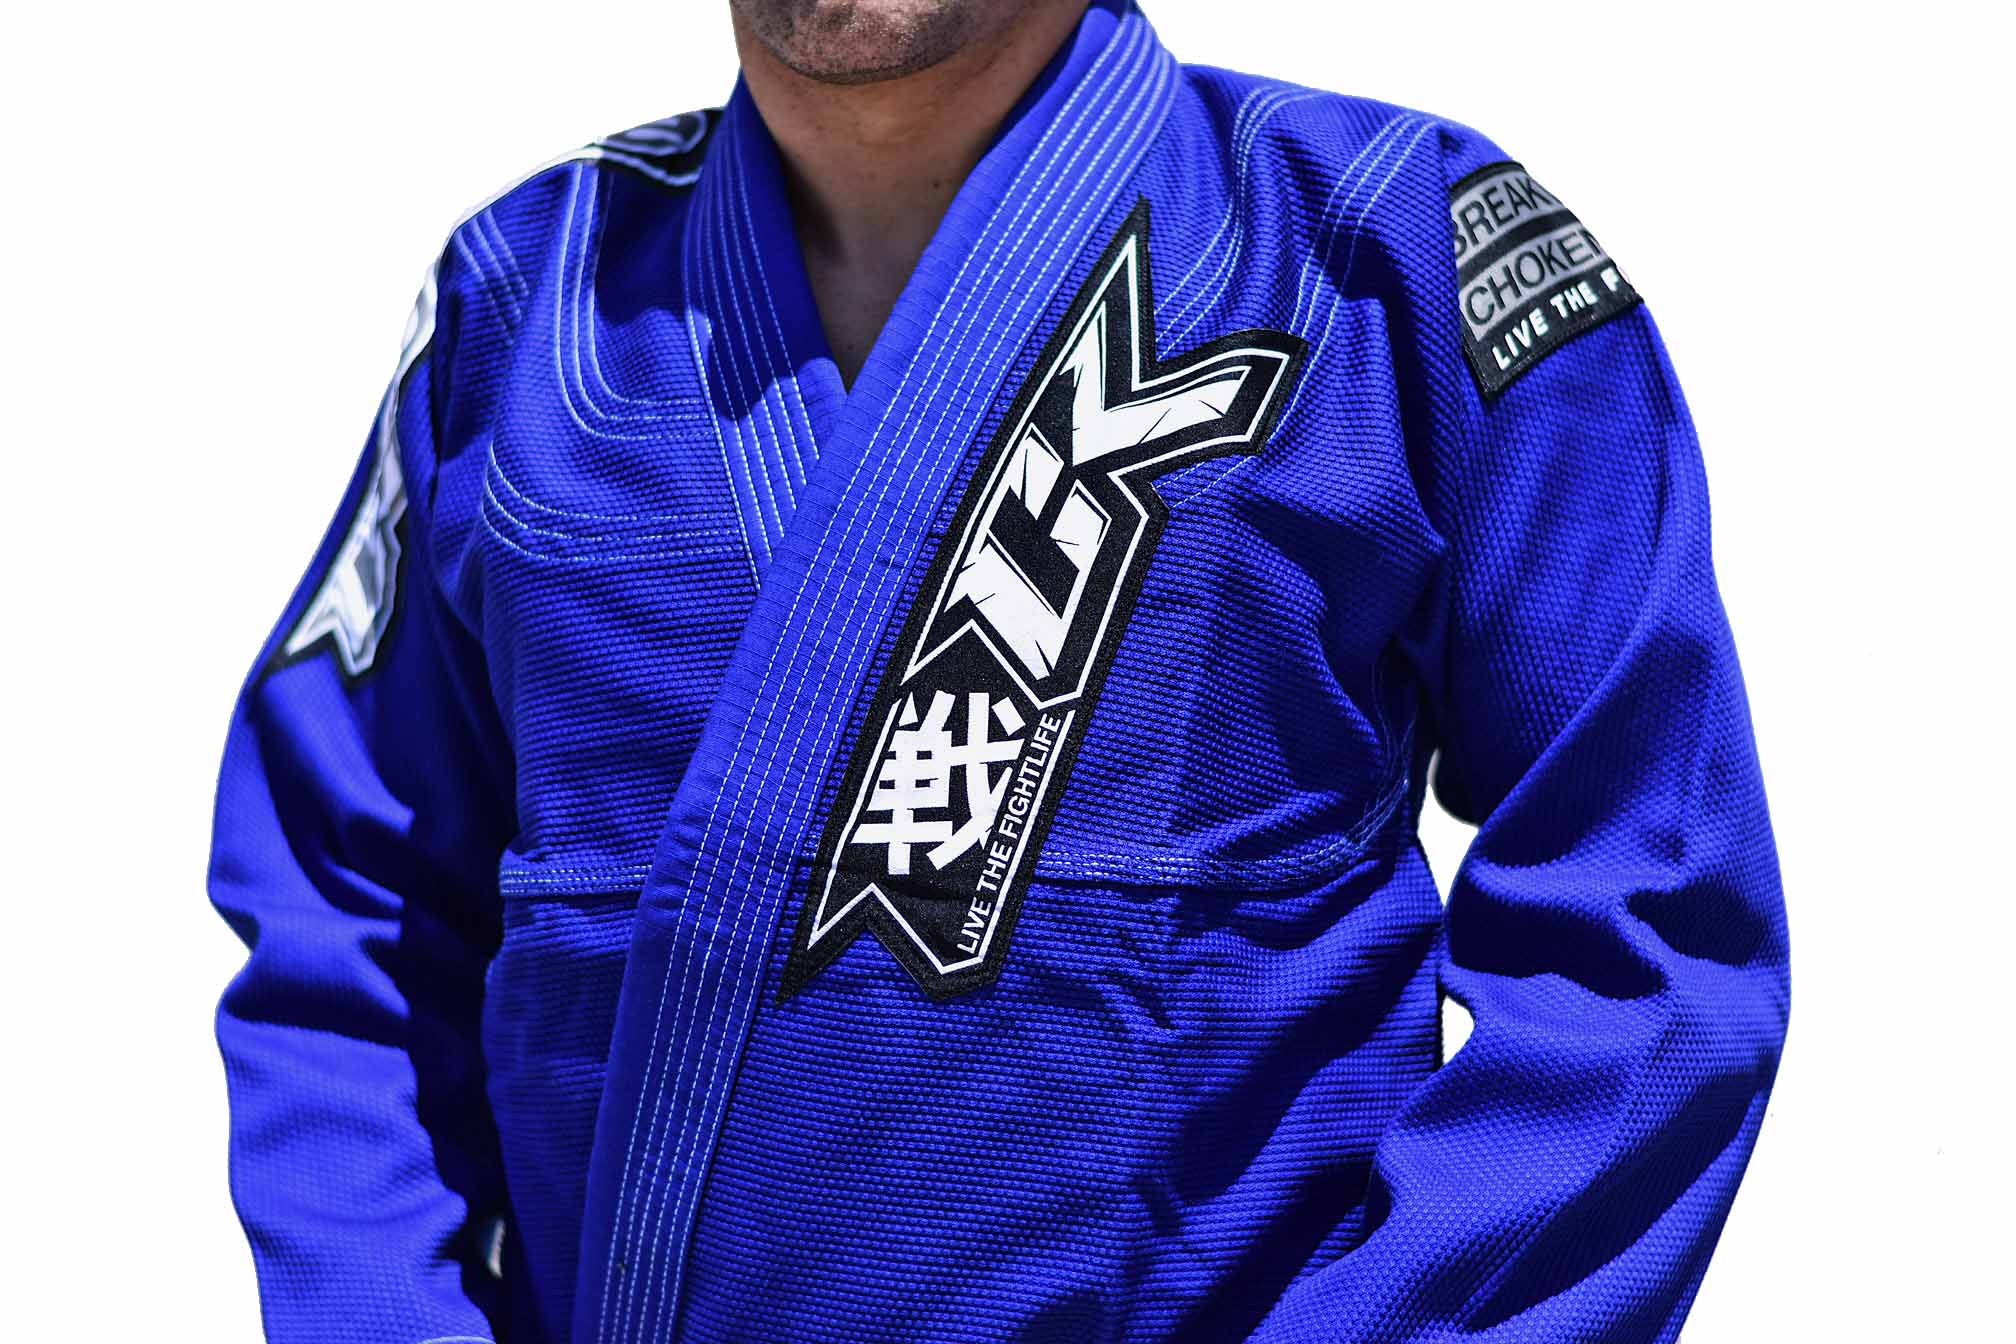 Download Contract Killer Discipline Jiu Jitsu Gi Blue - CK Fight Life